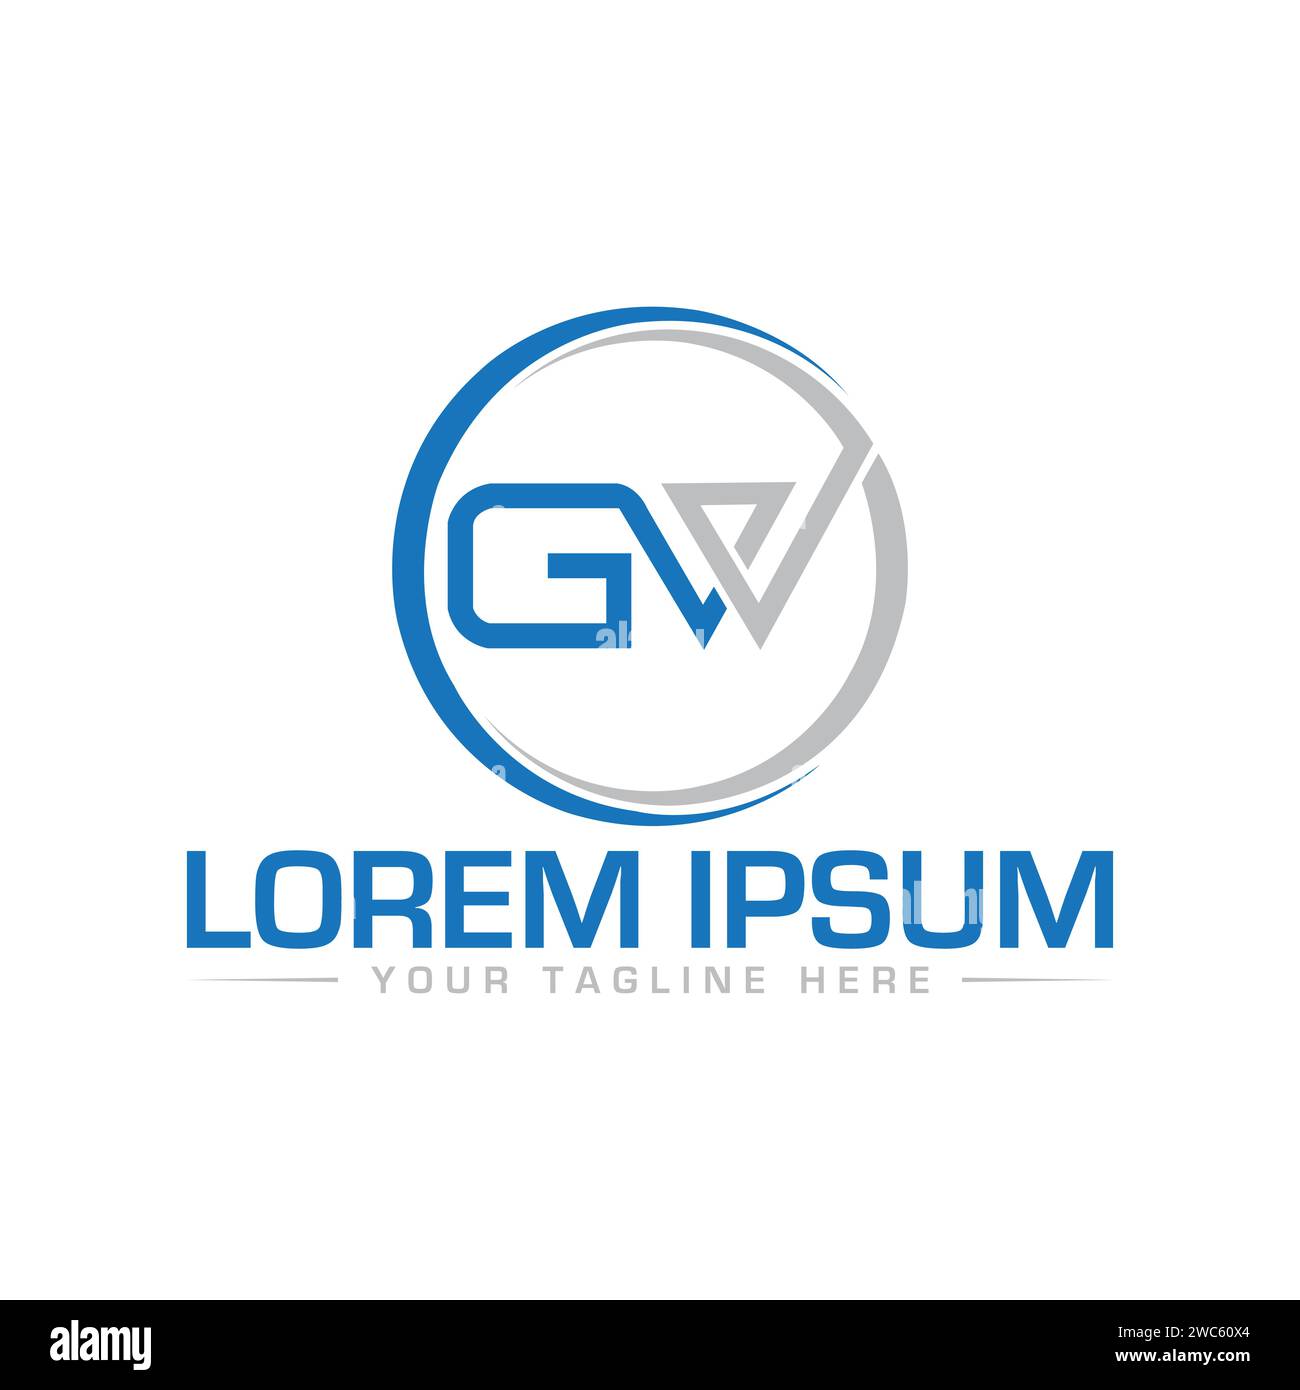 GW Letter Logo Design. Creative and Professional GW Logo Design. Stock Vector